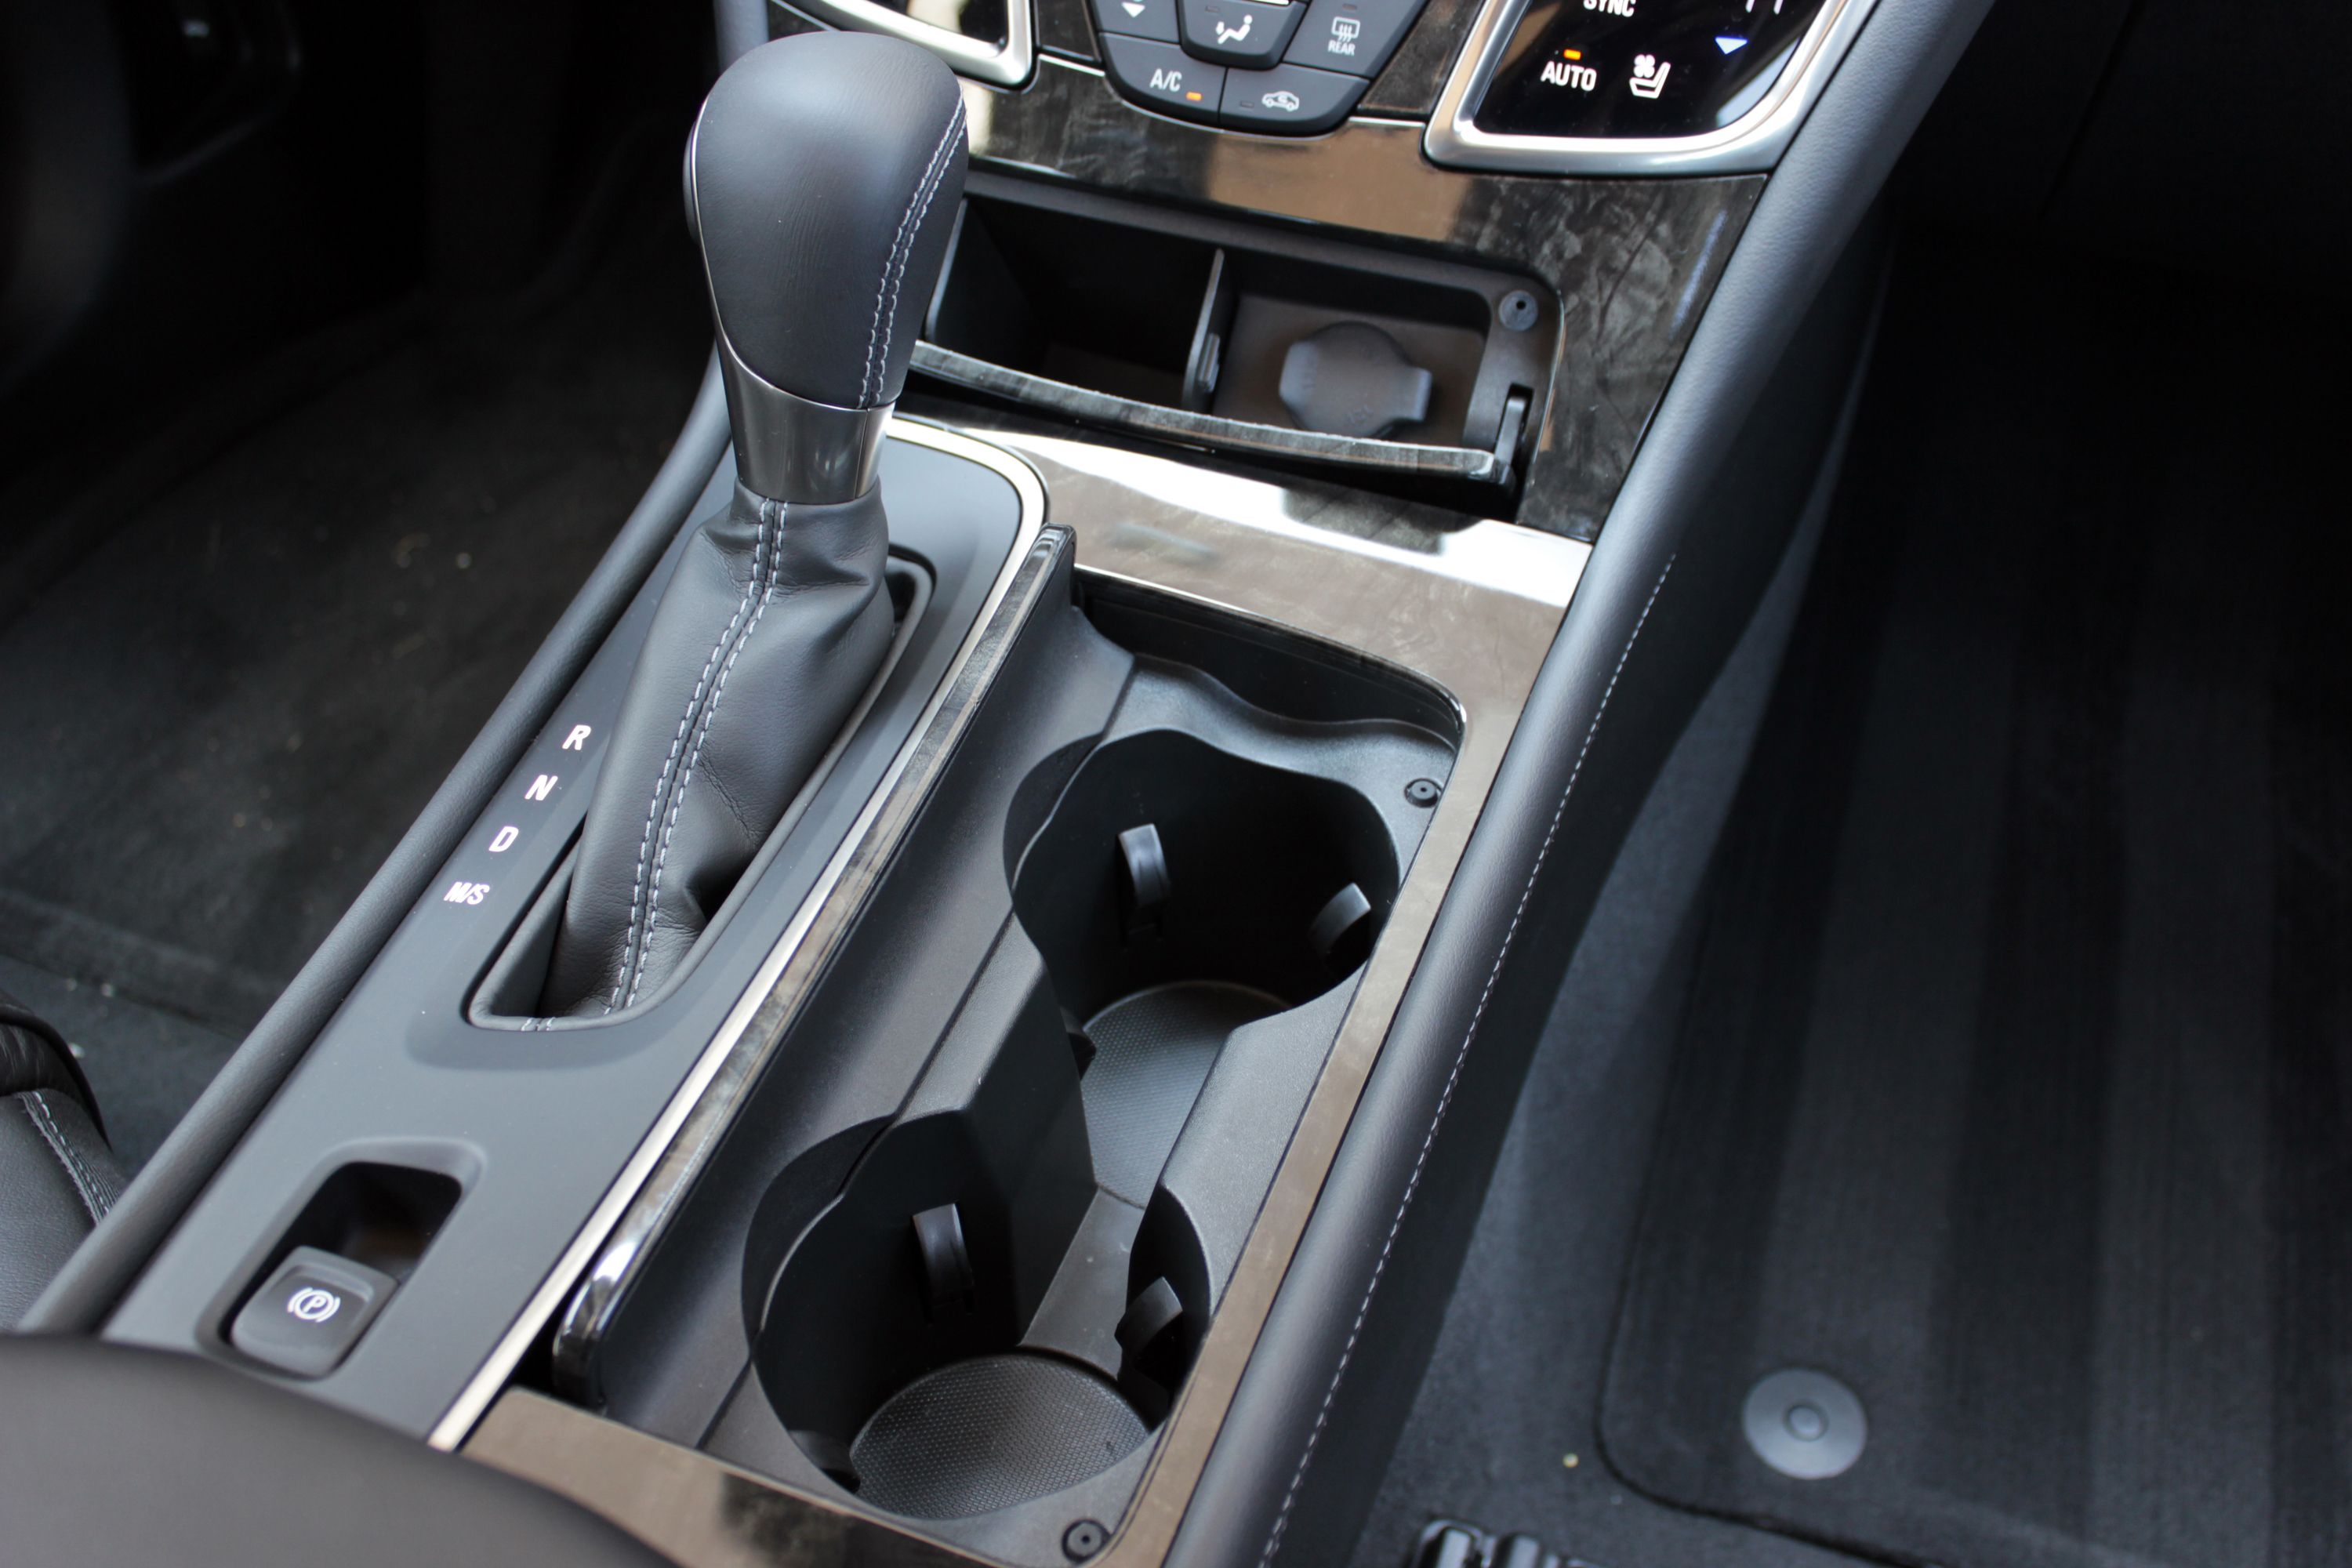 2015 Buick LaCrosse - Driven